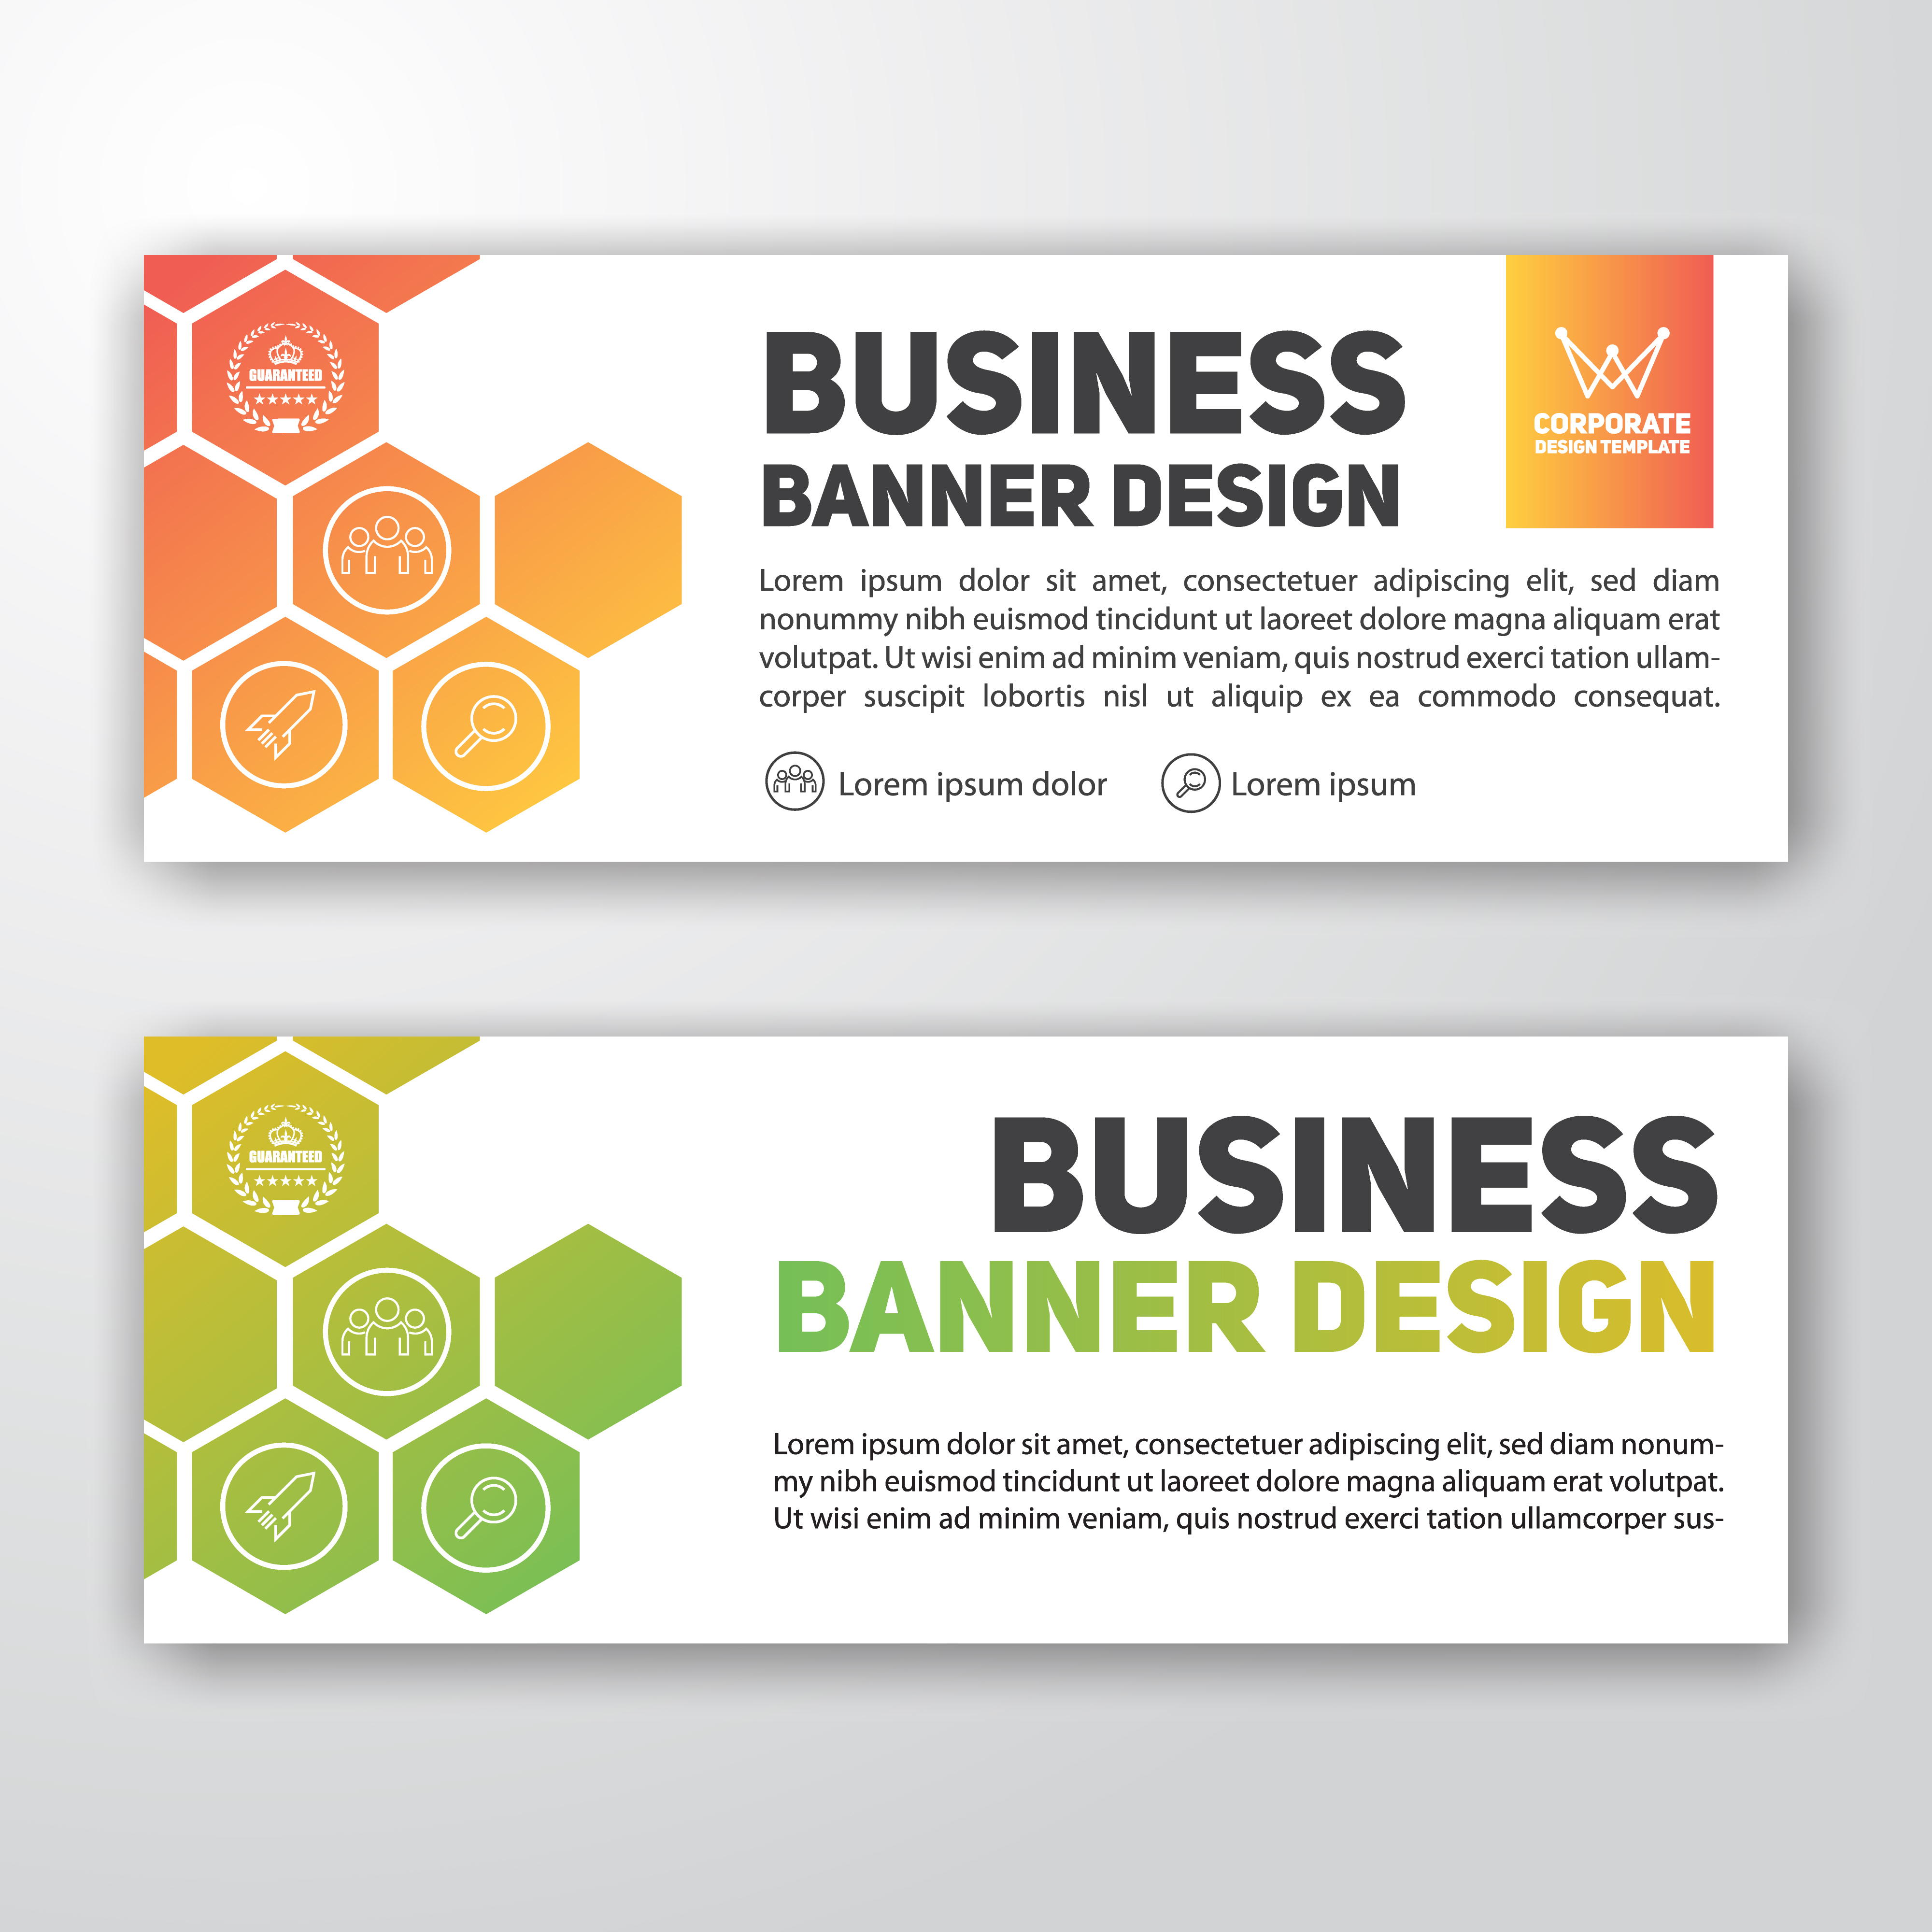 Modern corporate banner background design - Download Free ...